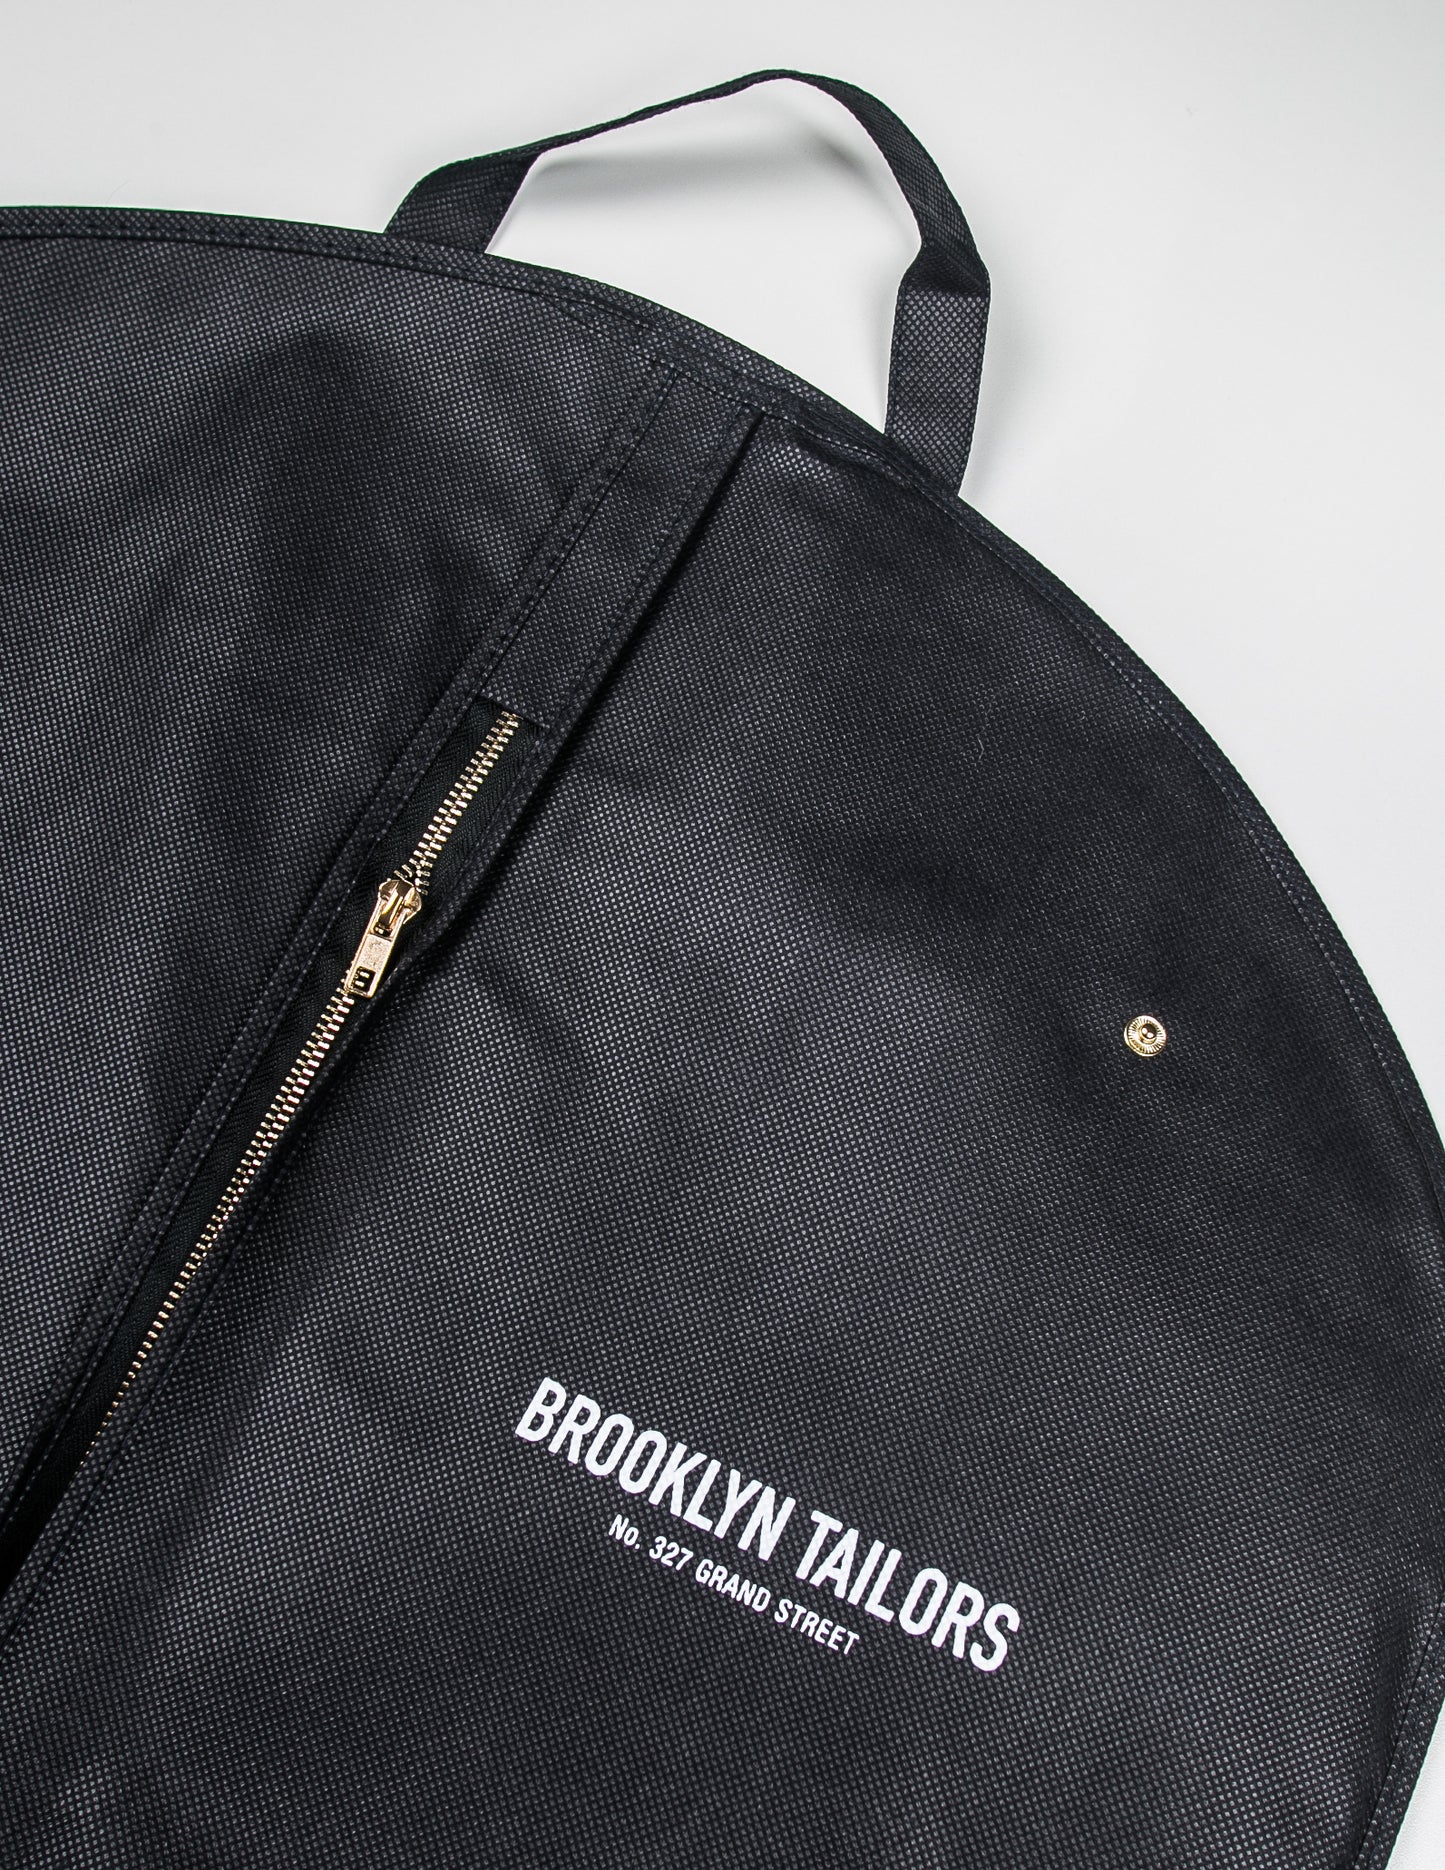 BROOKLYN TAILORS - Garment Bag